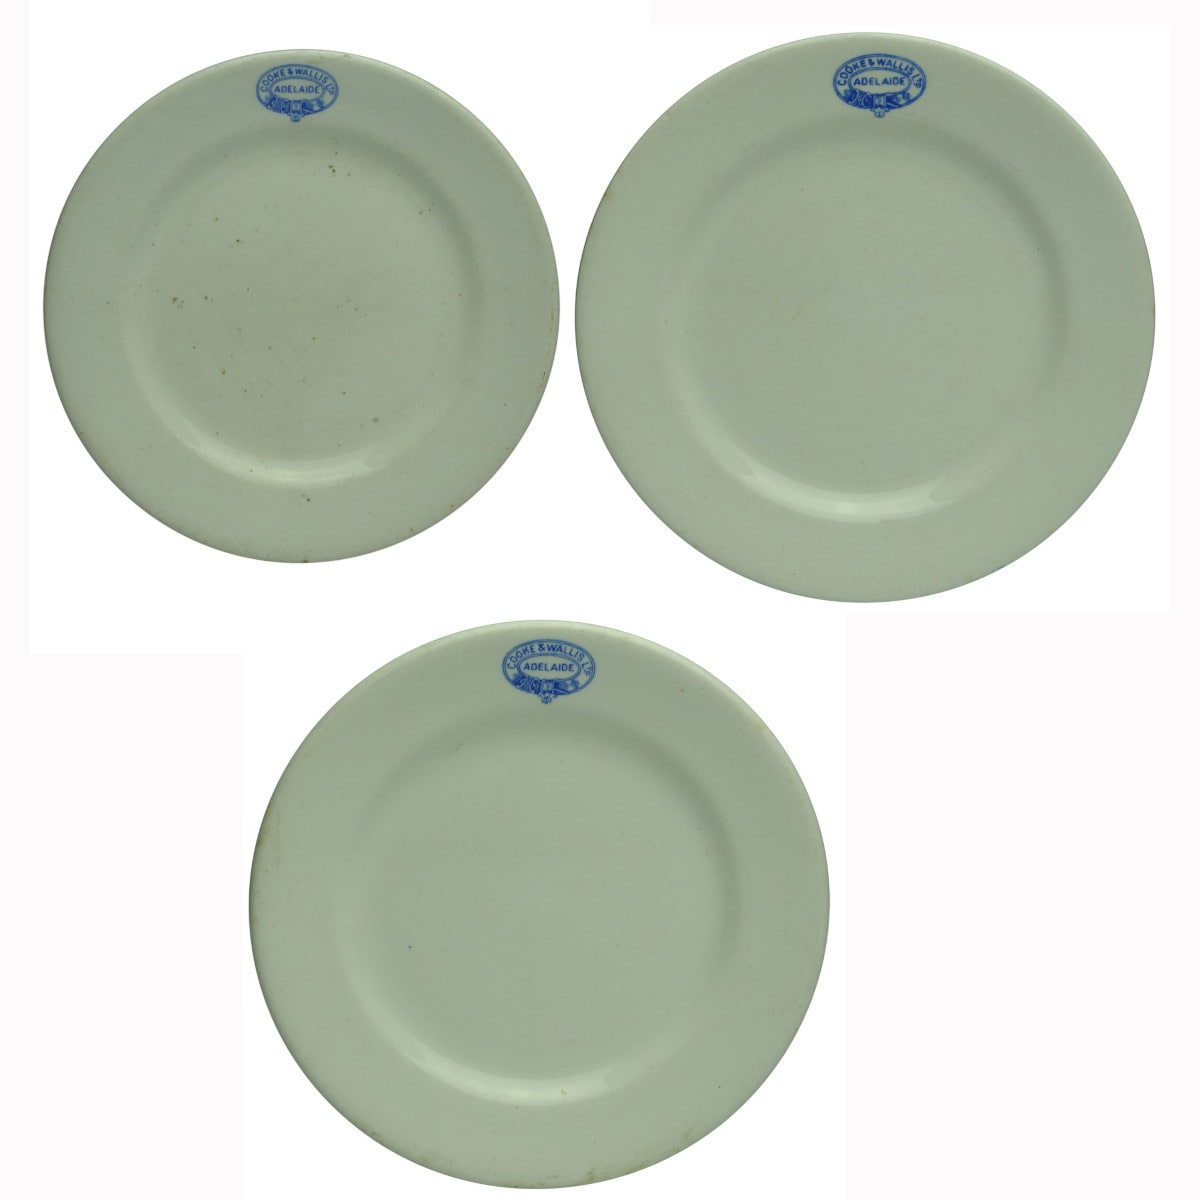 Three Cooke & Wallis, Adelaide Hotelware plates